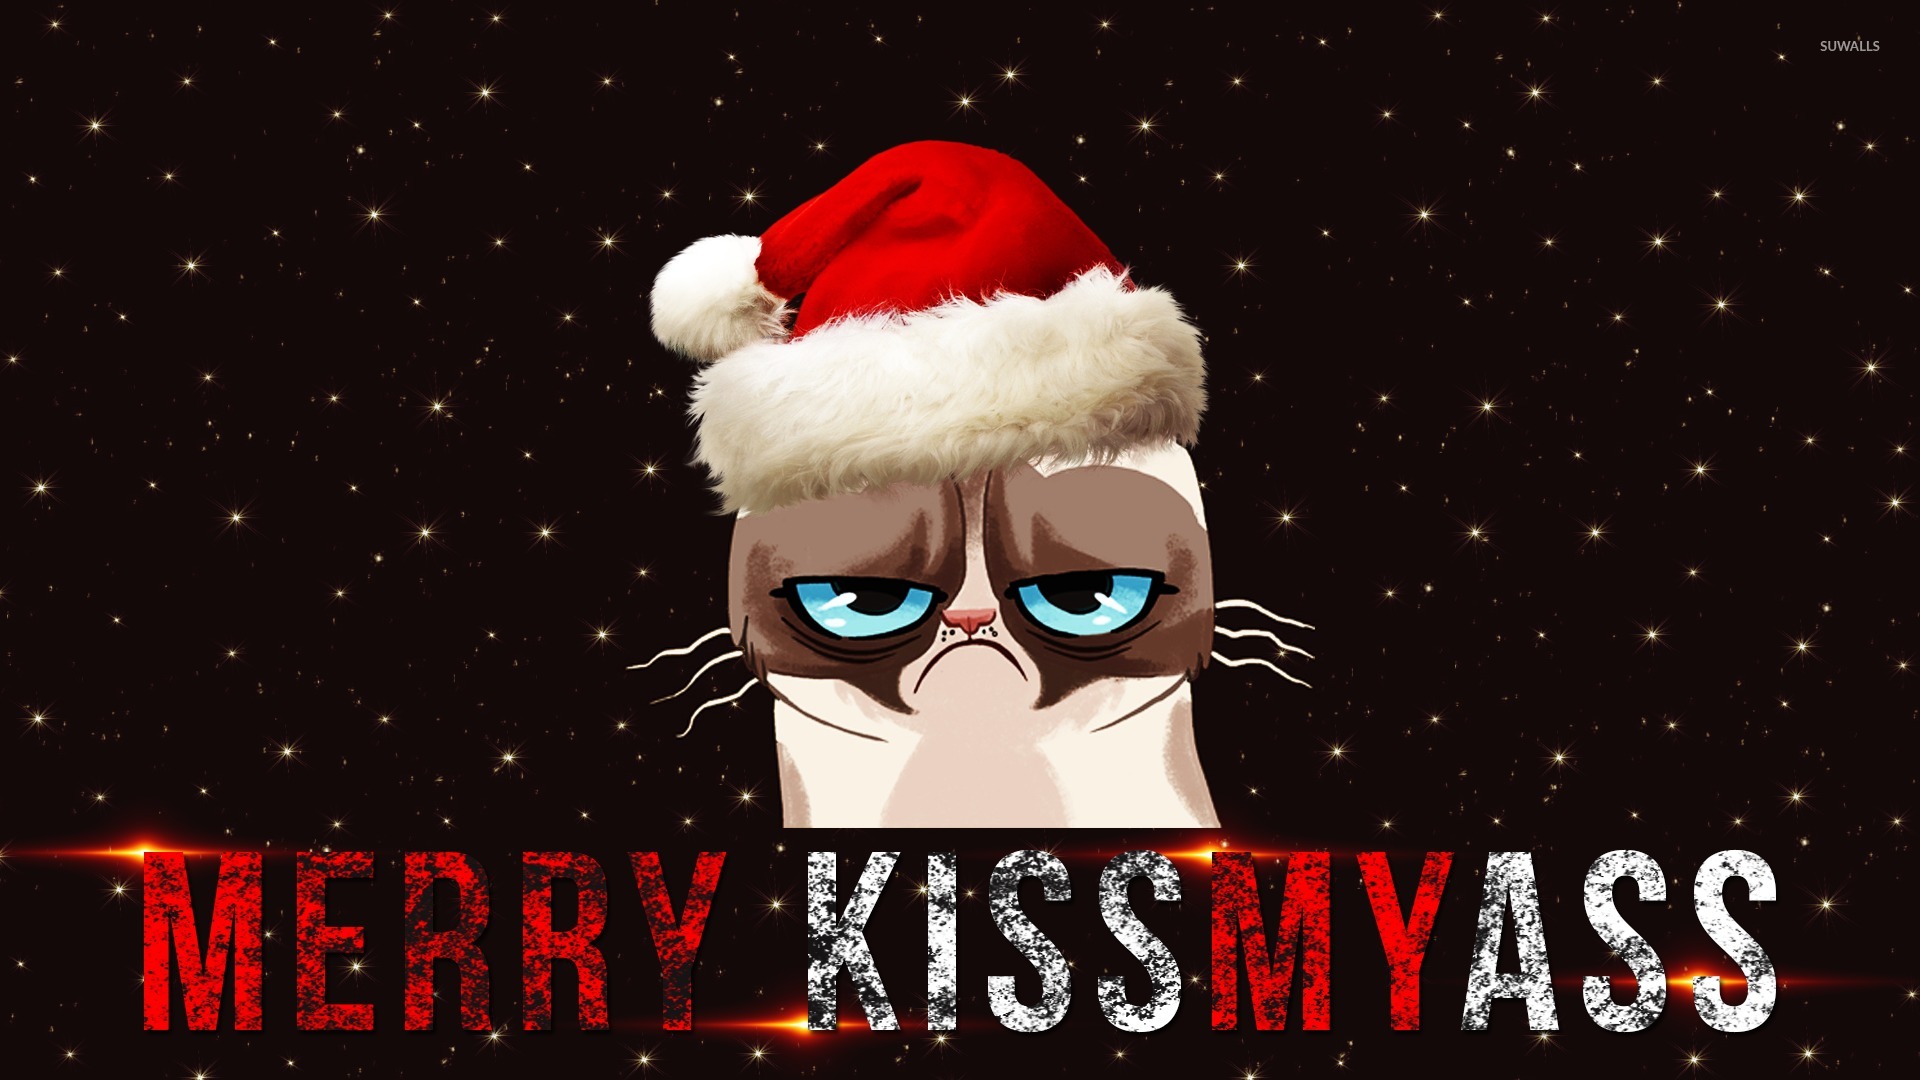 Grumpy Christmas wallpaper - Meme wallpapers - #26213.